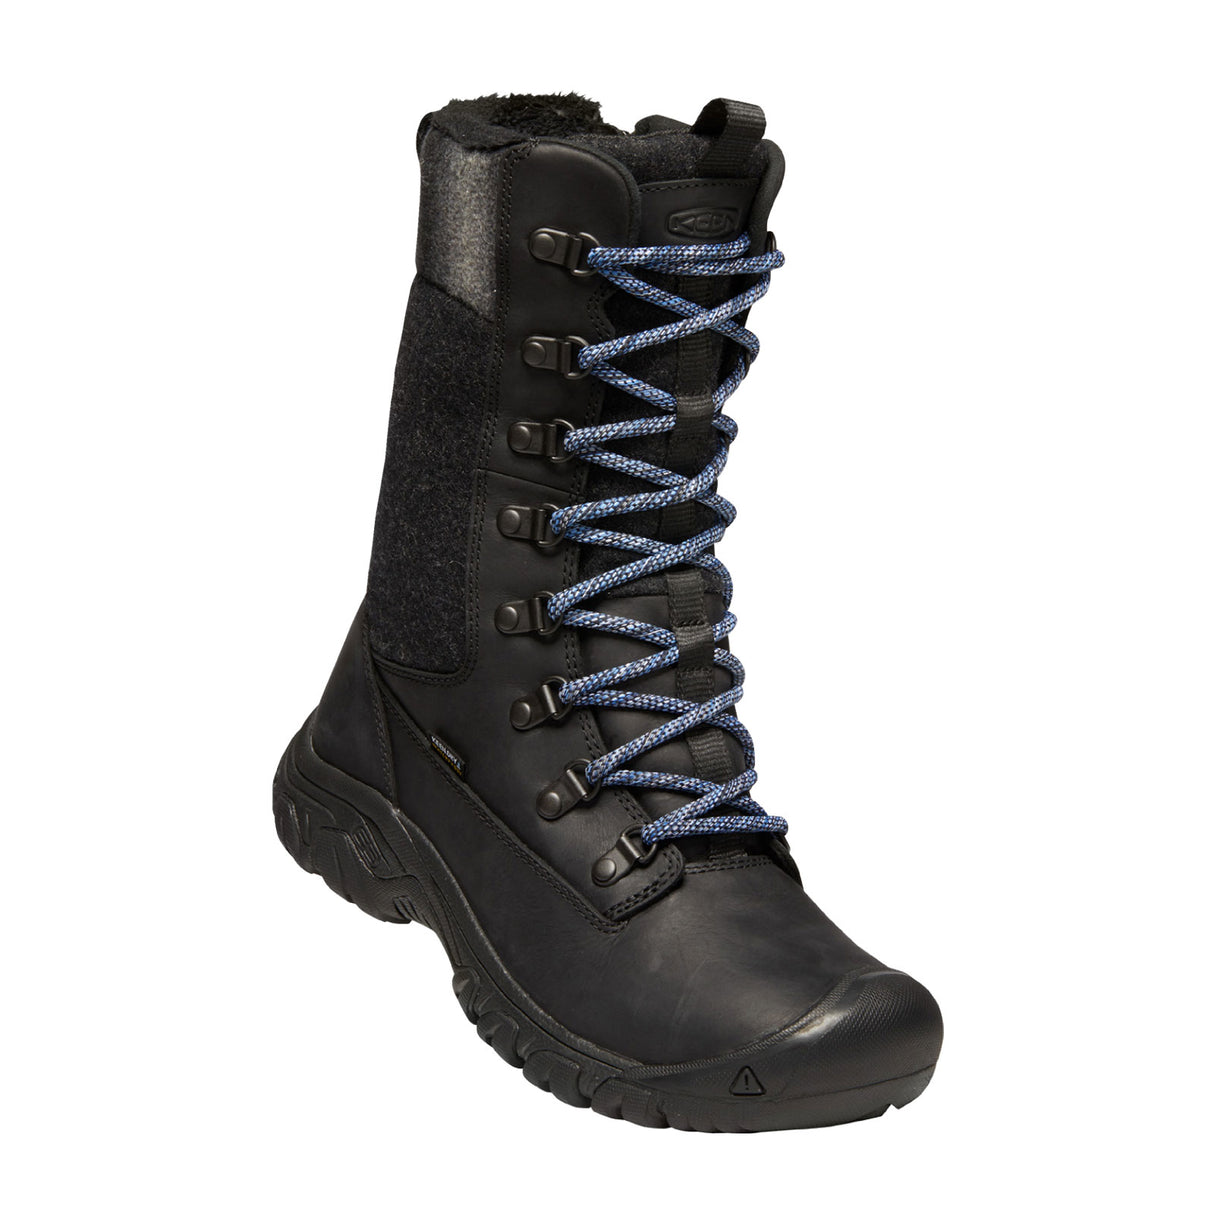 Keen Greta Tall Waterproof Boot (Women) - Black/Black Boots - Winter - High Boot - The Heel Shoe Fitters